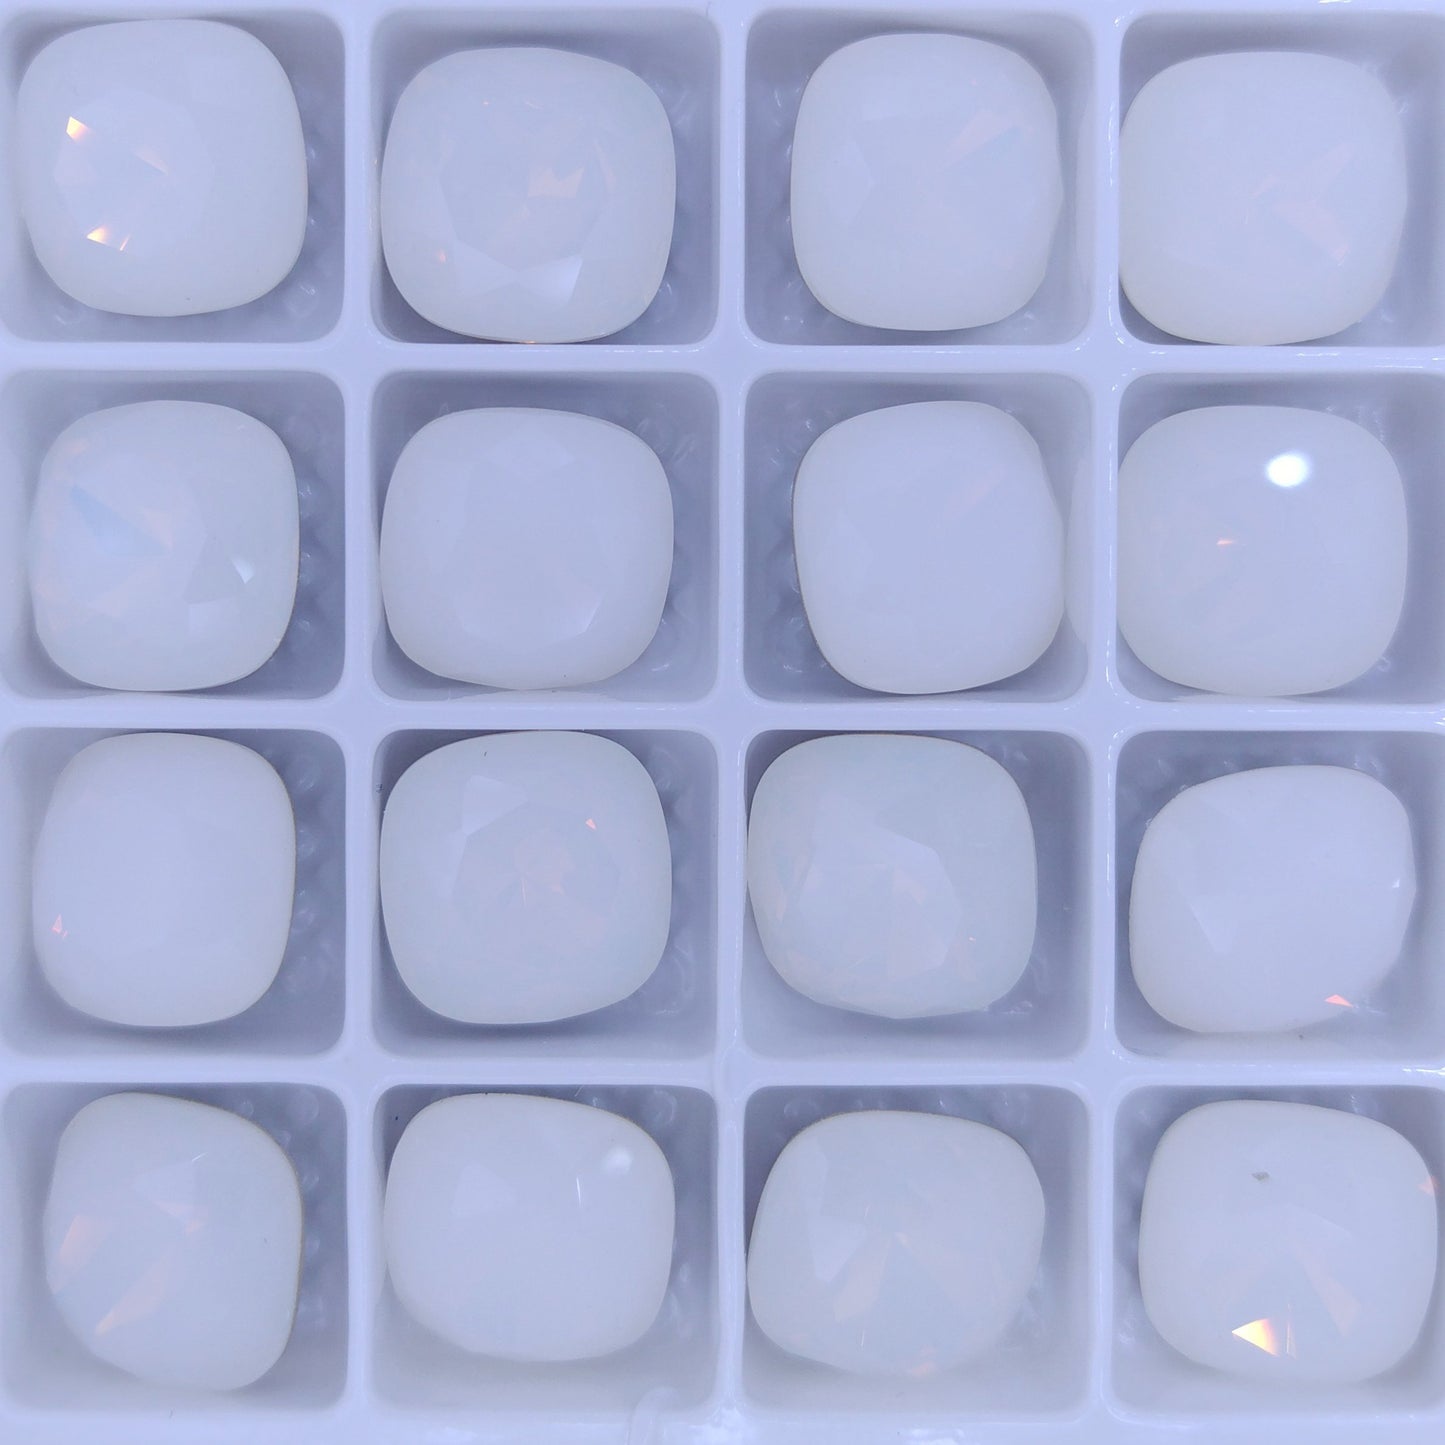 12mm round square in White Opal (Aurora)